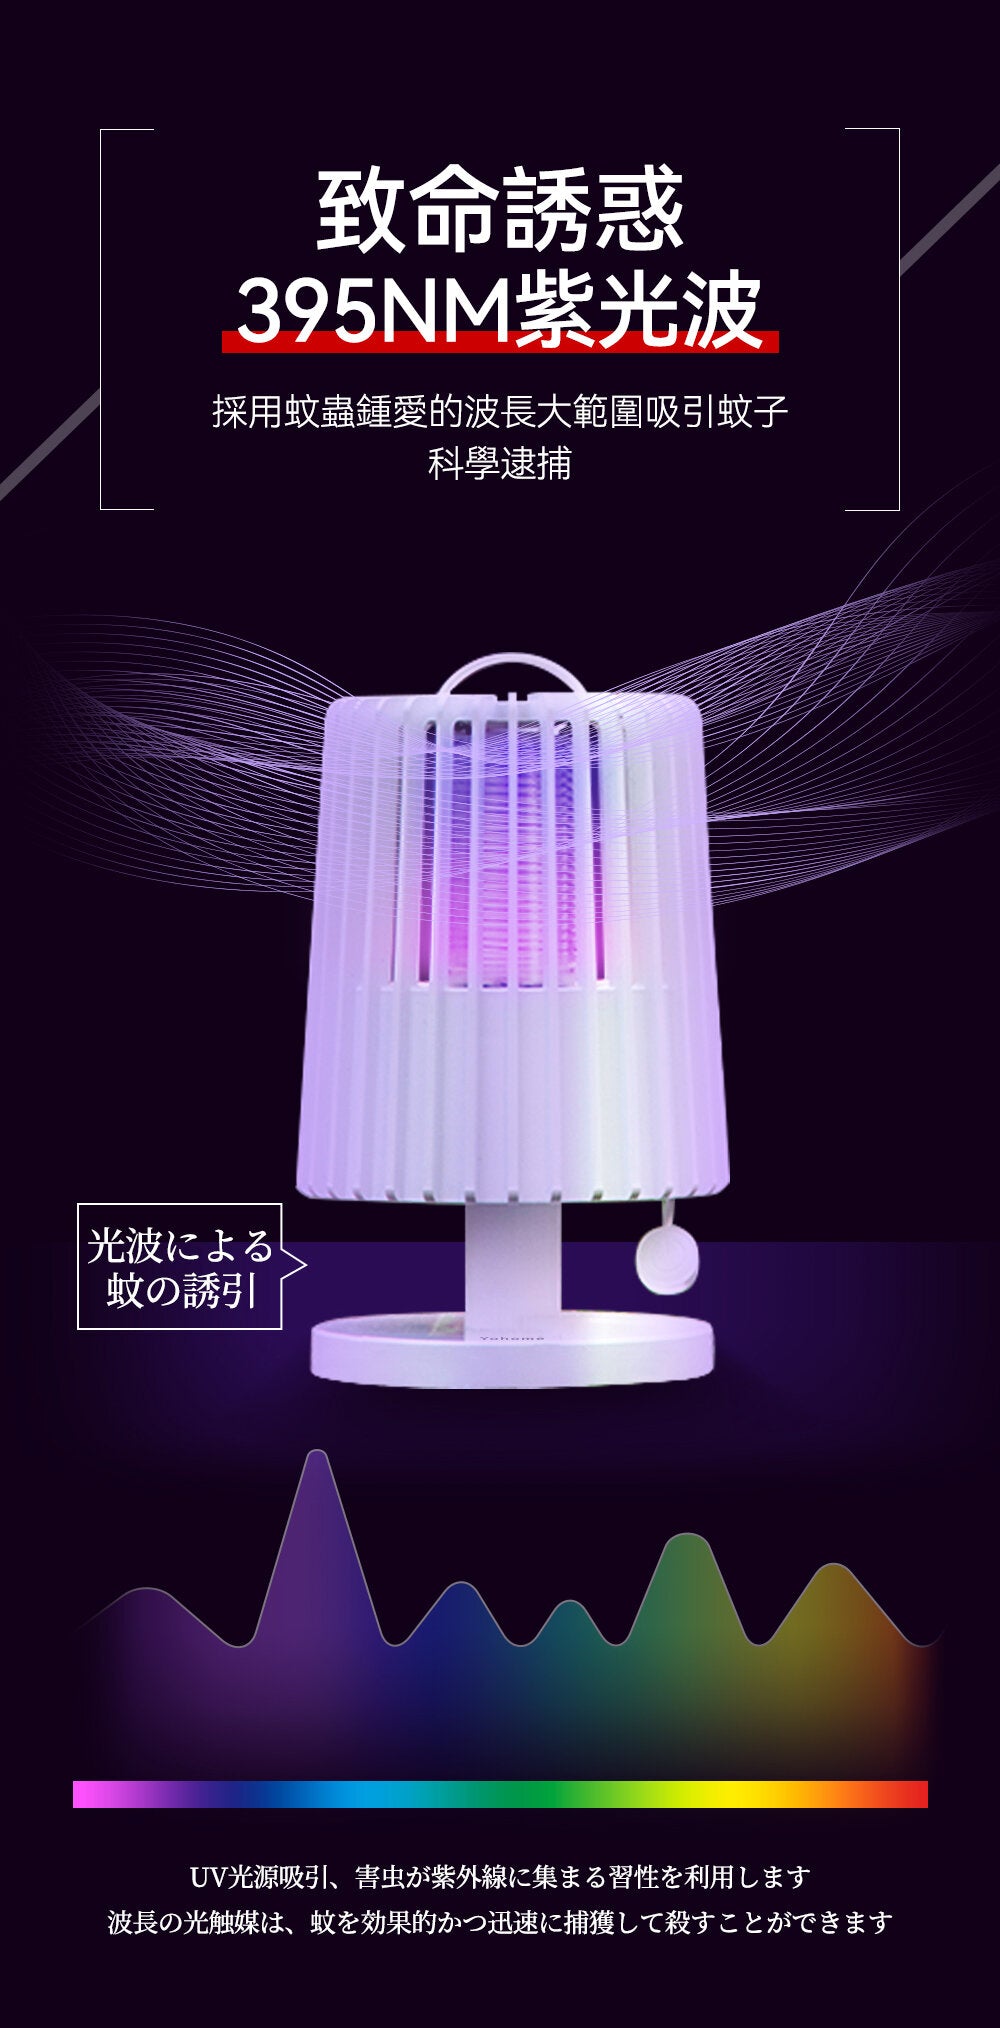 Home - Japan Yohome removable inhalation electric shock powerful mosquito killer machine | Mosquito trap | Mosquito killer | Desk lamp | Night light LJC-155